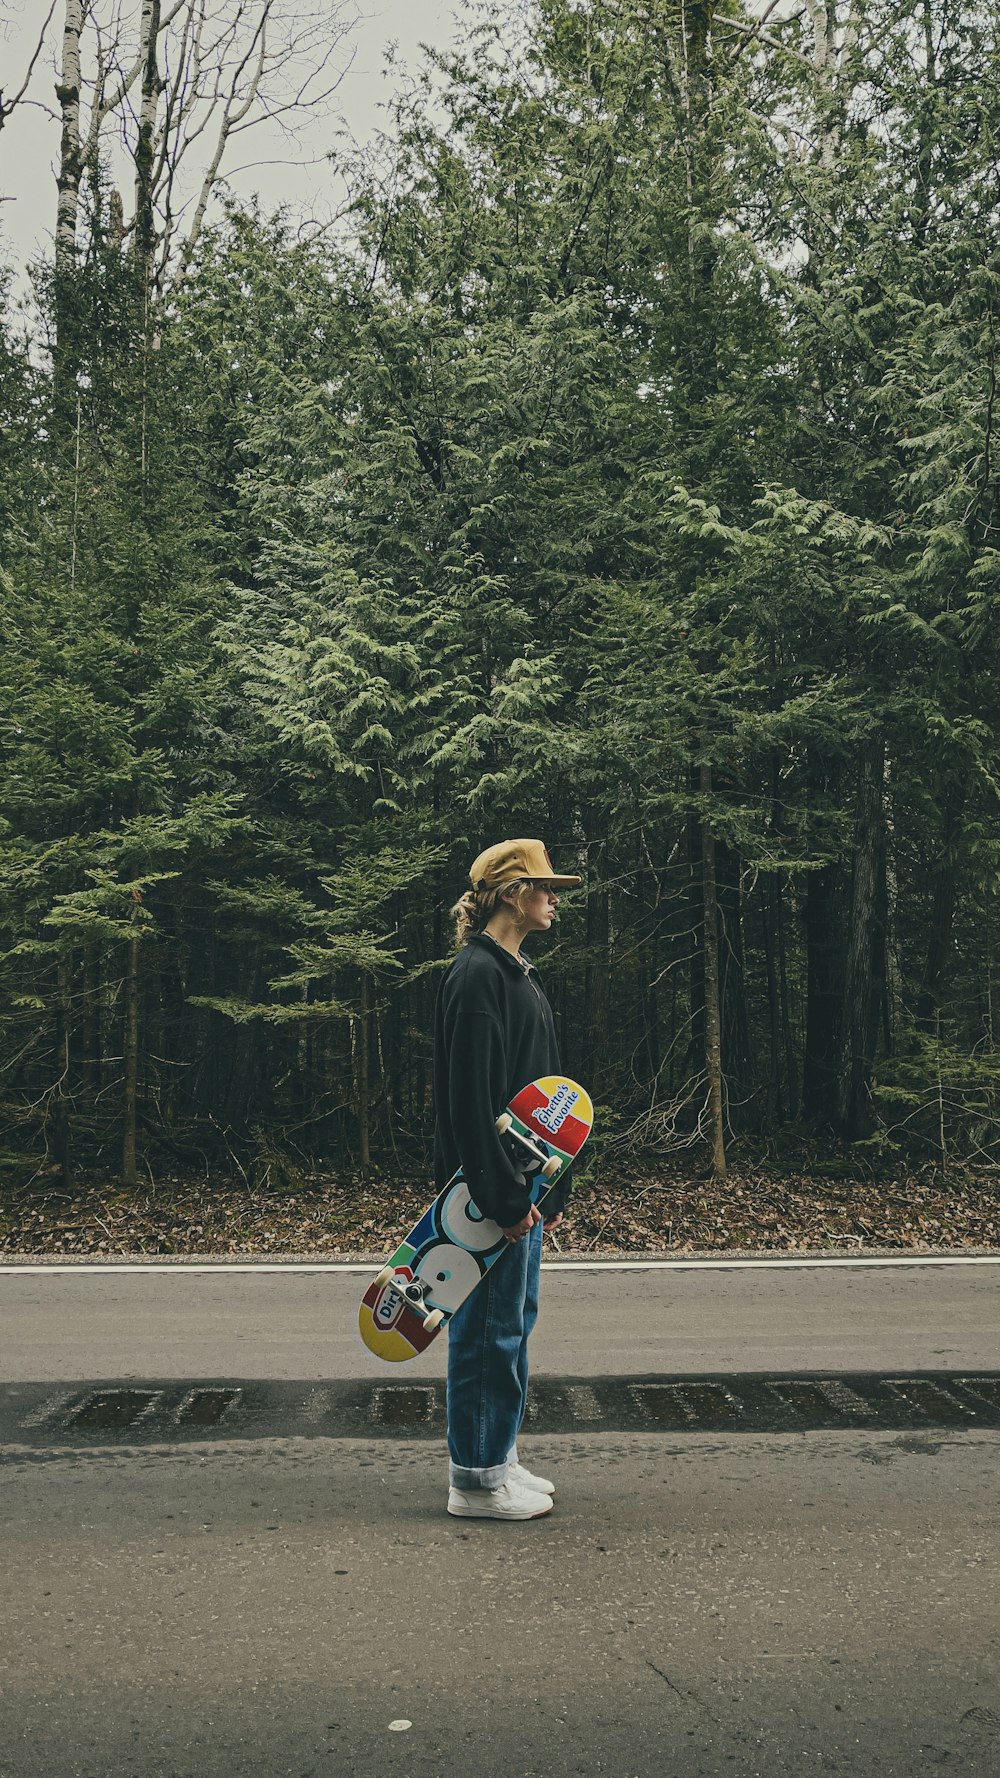 man in black jacket and blue denim jeans riding skateboard on road during daytime